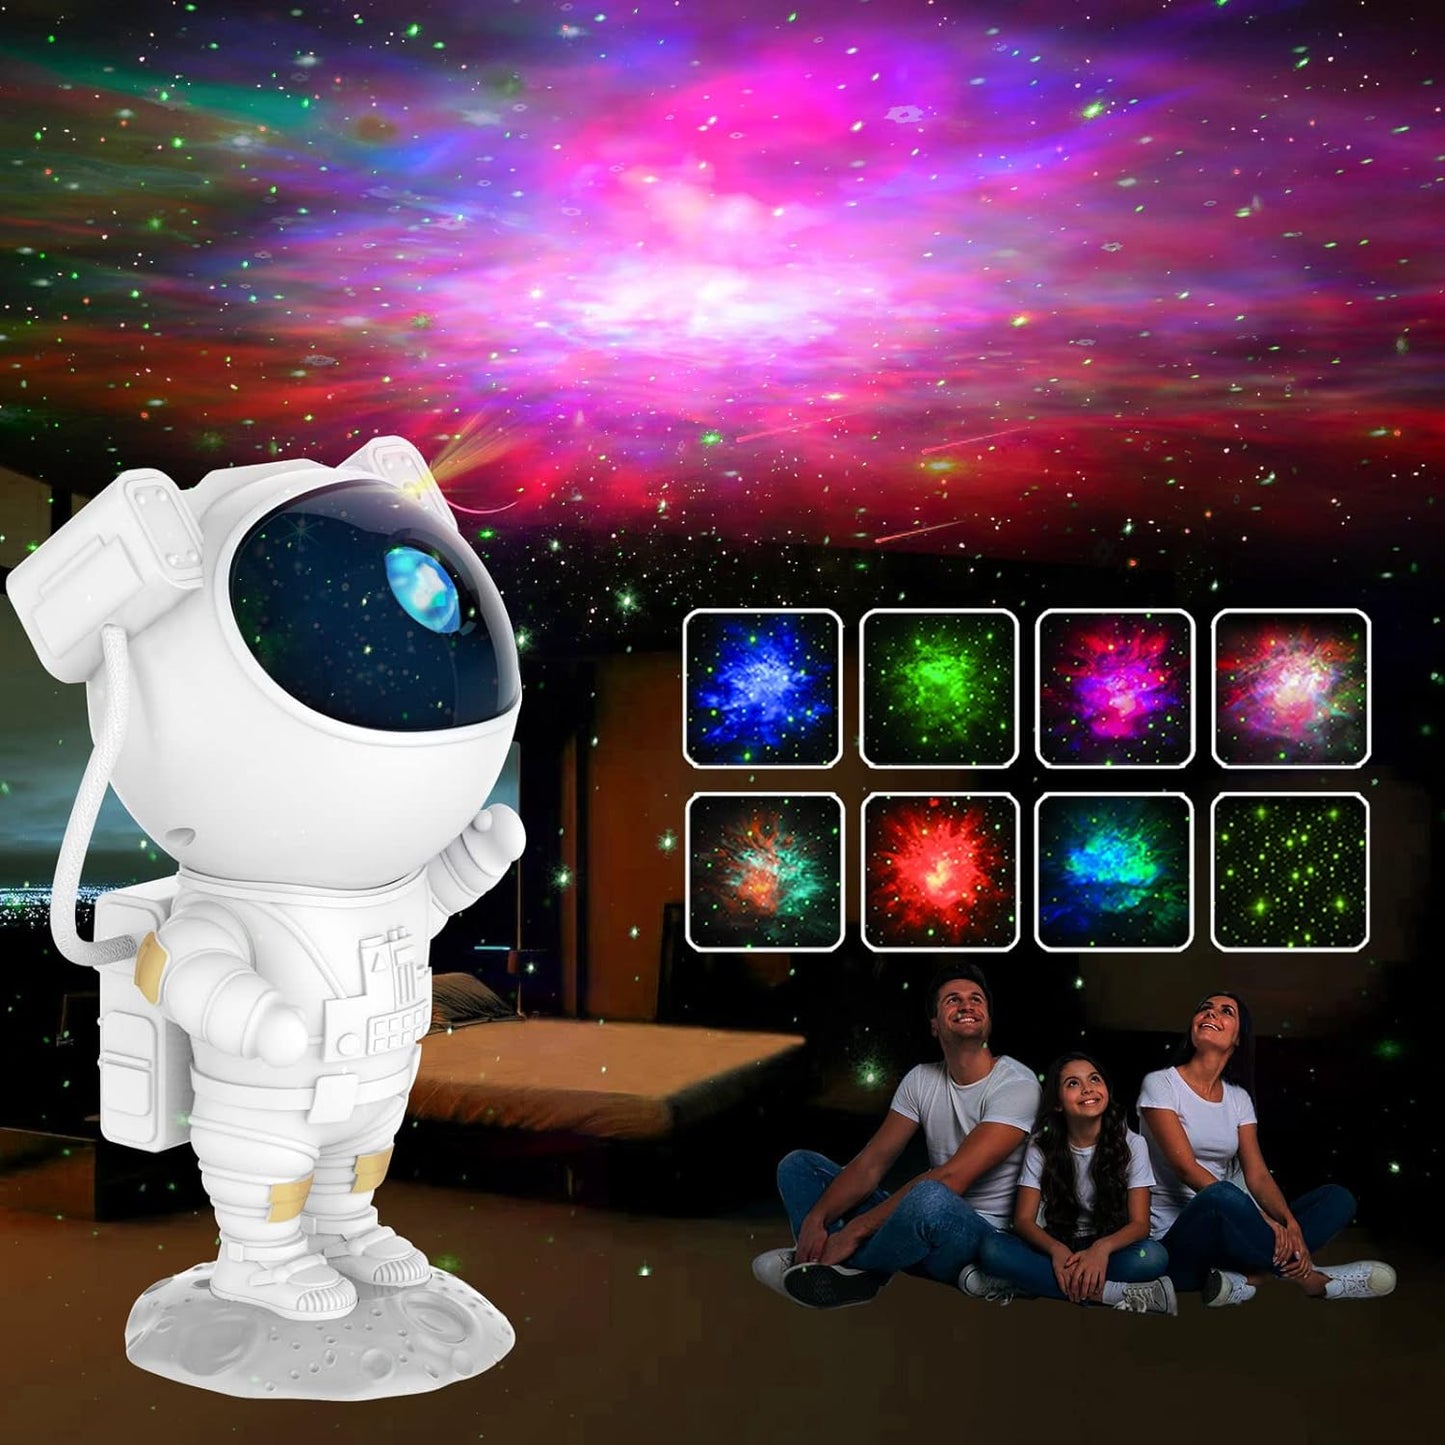 The Astronaut Galaxy Light Projector